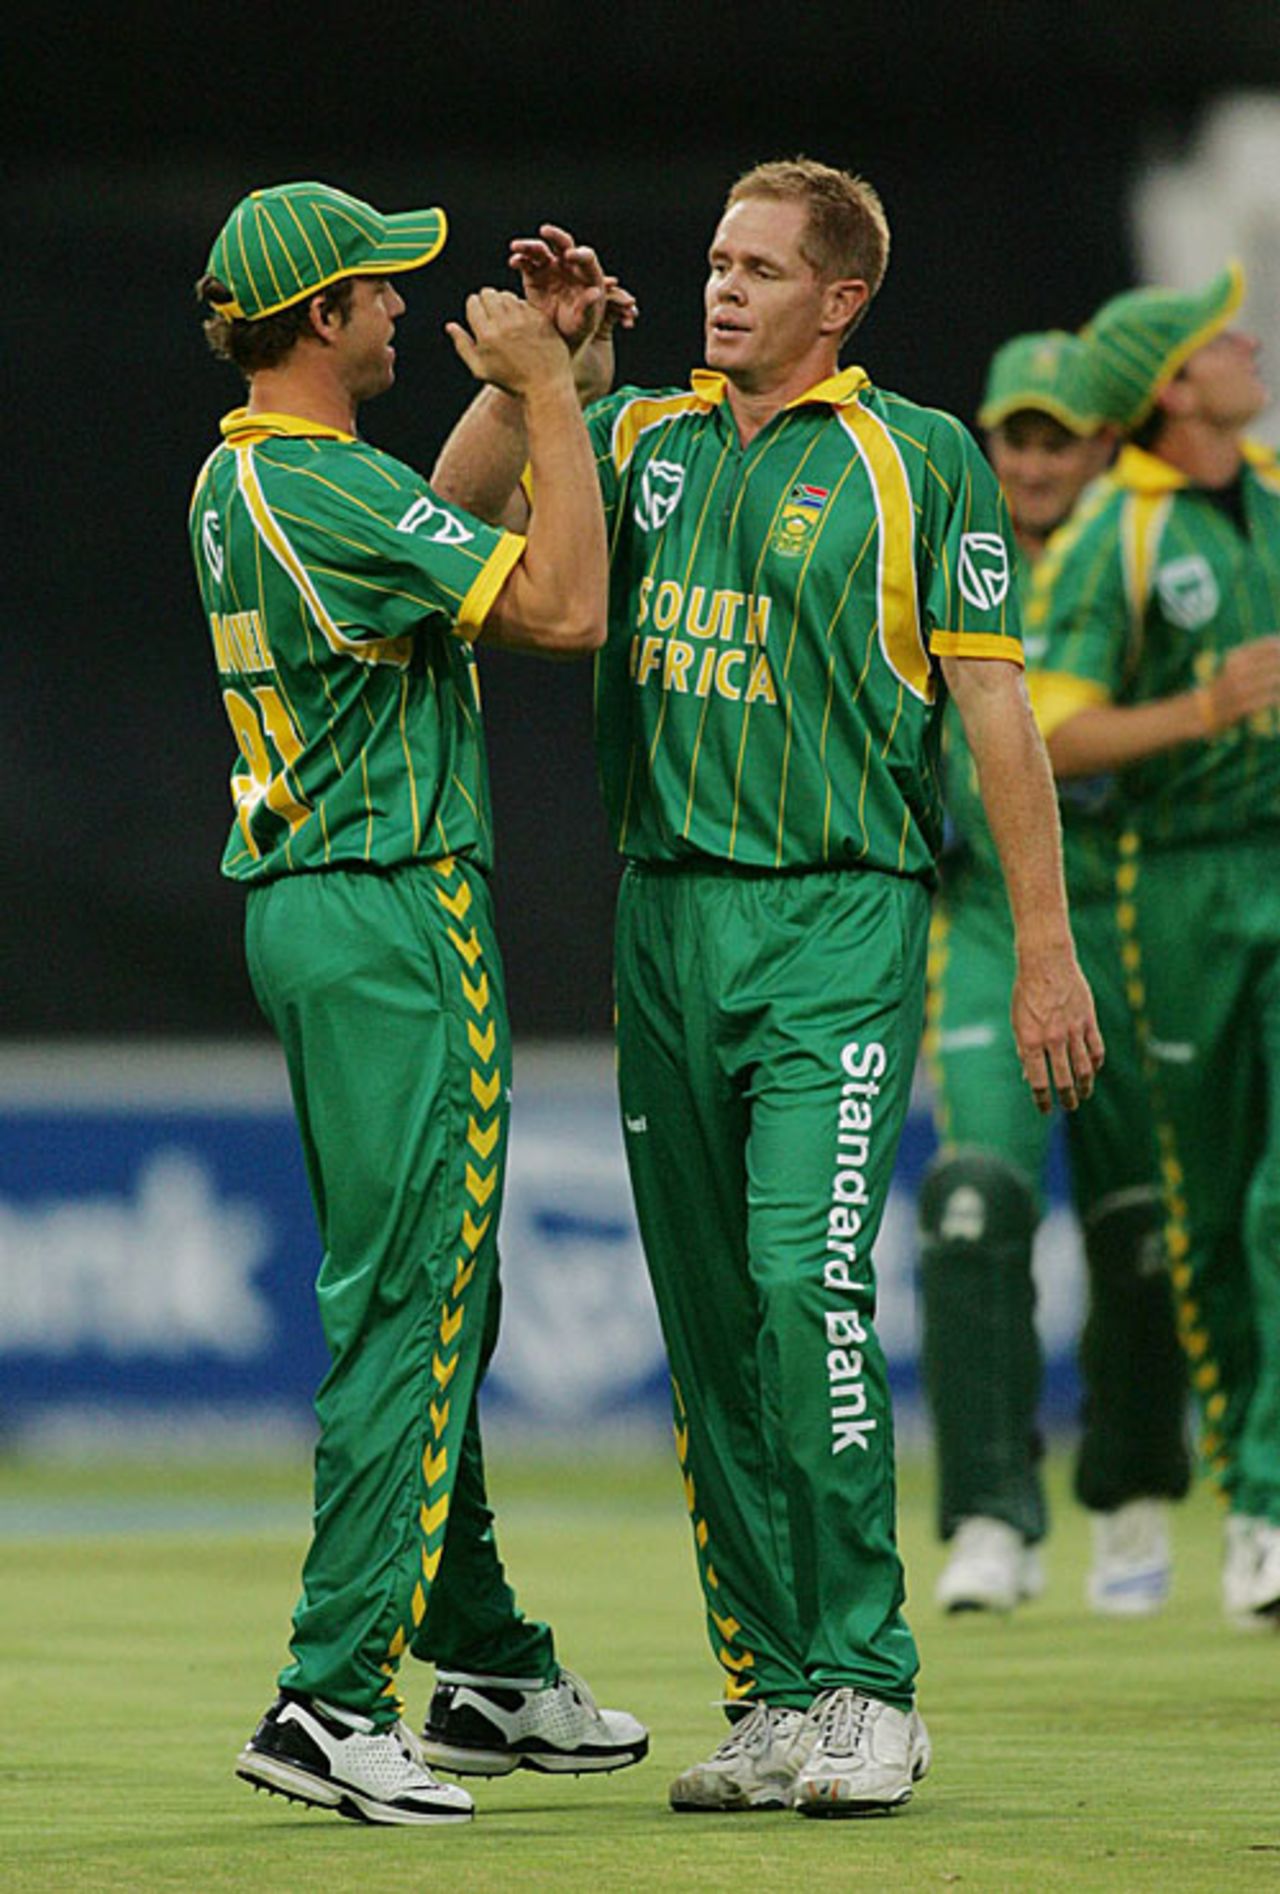 Shaun Pollock celebrates one of his three wickets, South Africa v New Zealand, Twenty20 International, Johannesburg, November 23, 2007